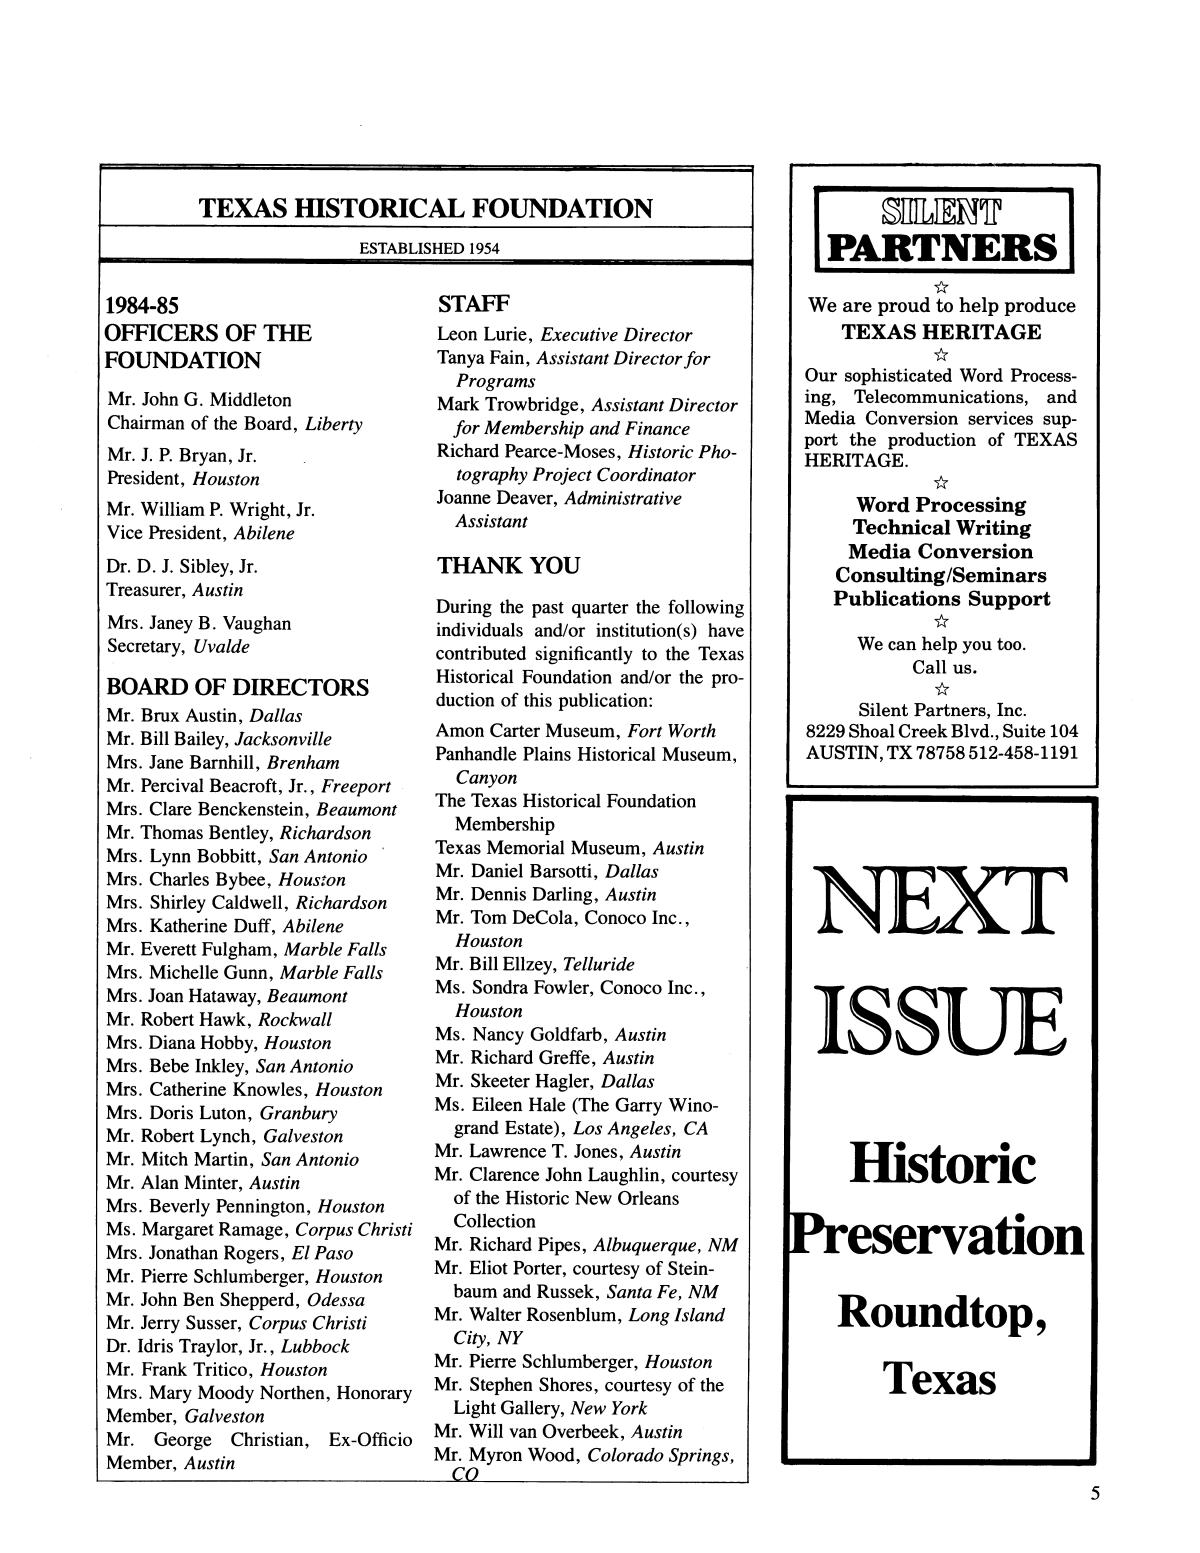 Texas Heritage, Volume 2, Number 2, Spring 1985
                                                
                                                    5
                                                